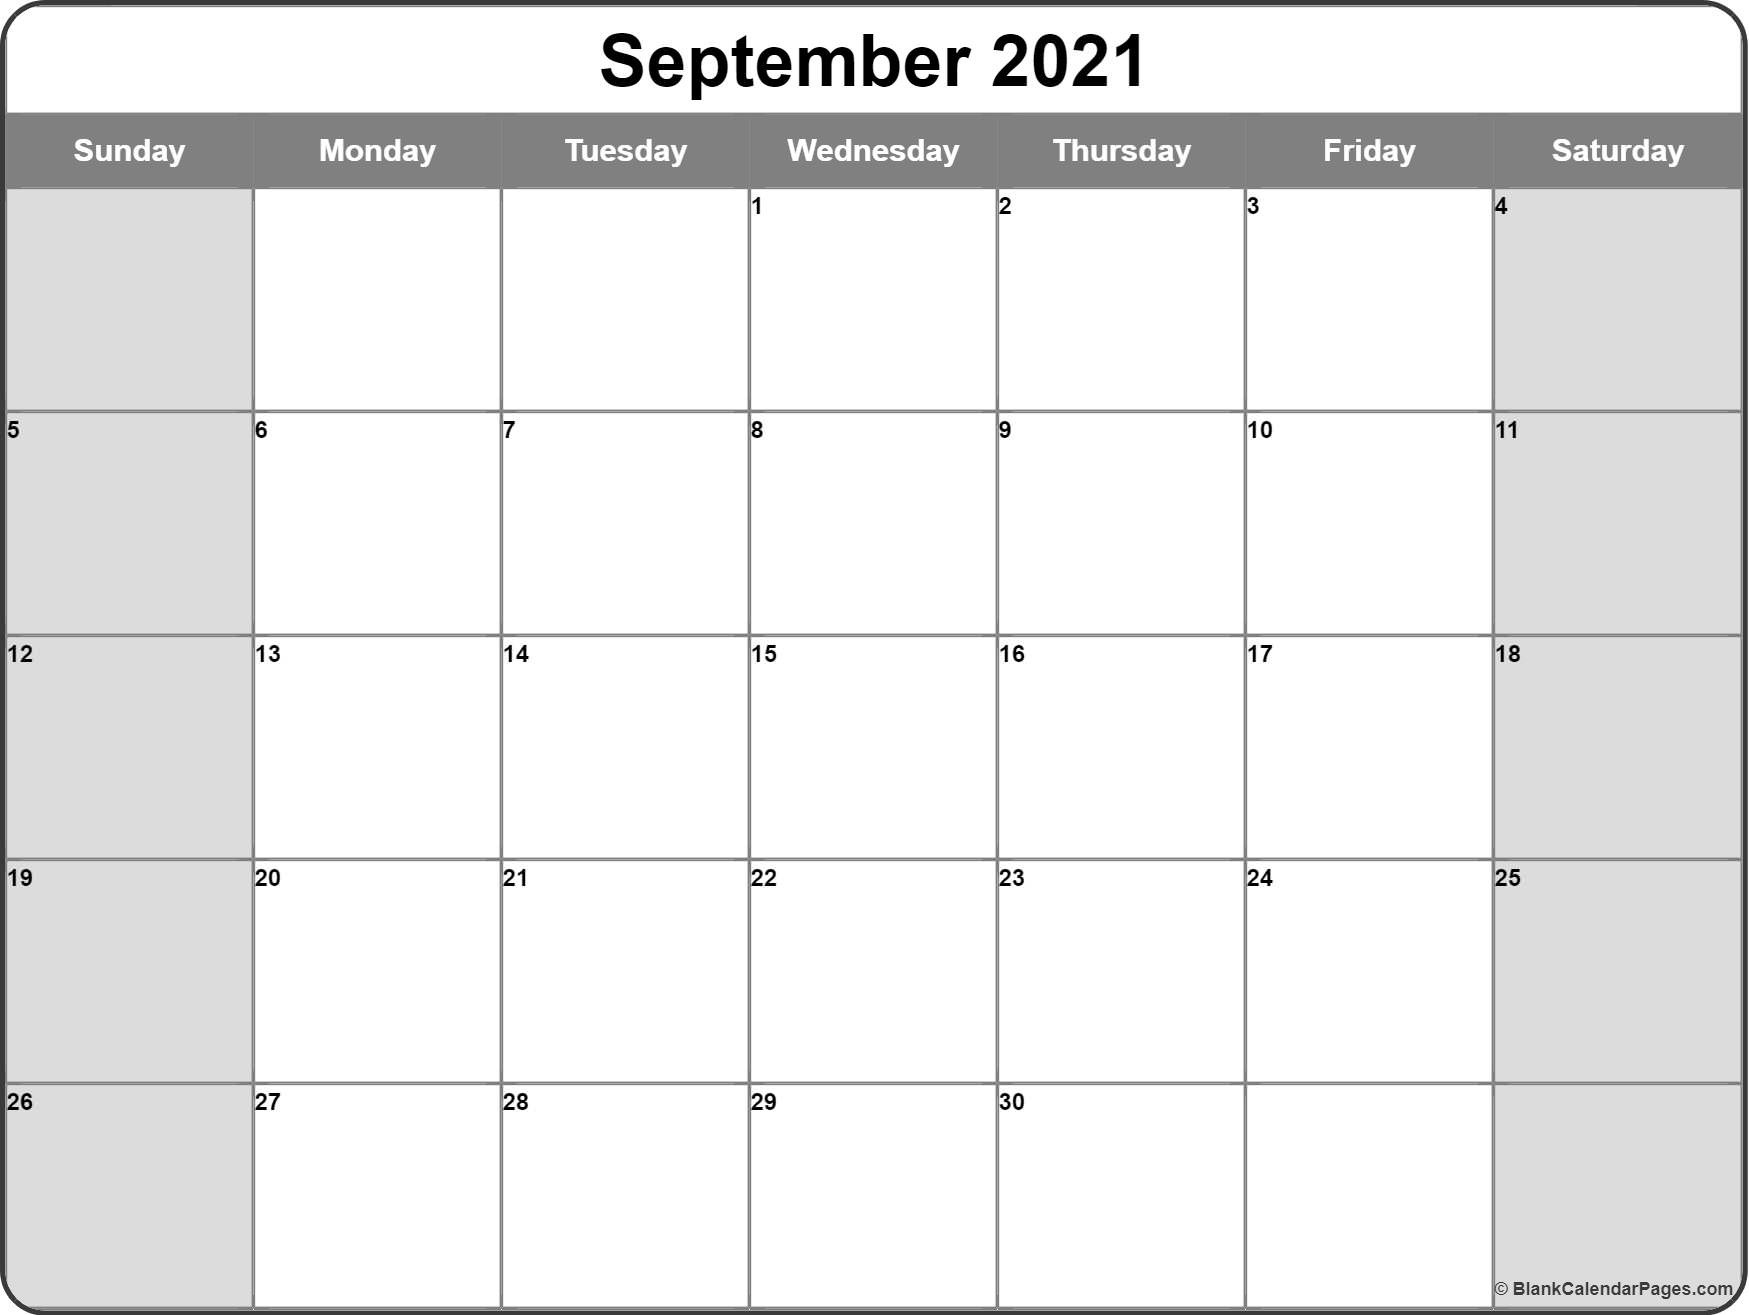 September 2021 Calendar | Free Printable Monthly Calendars-Free Printable Calendar 2021 September